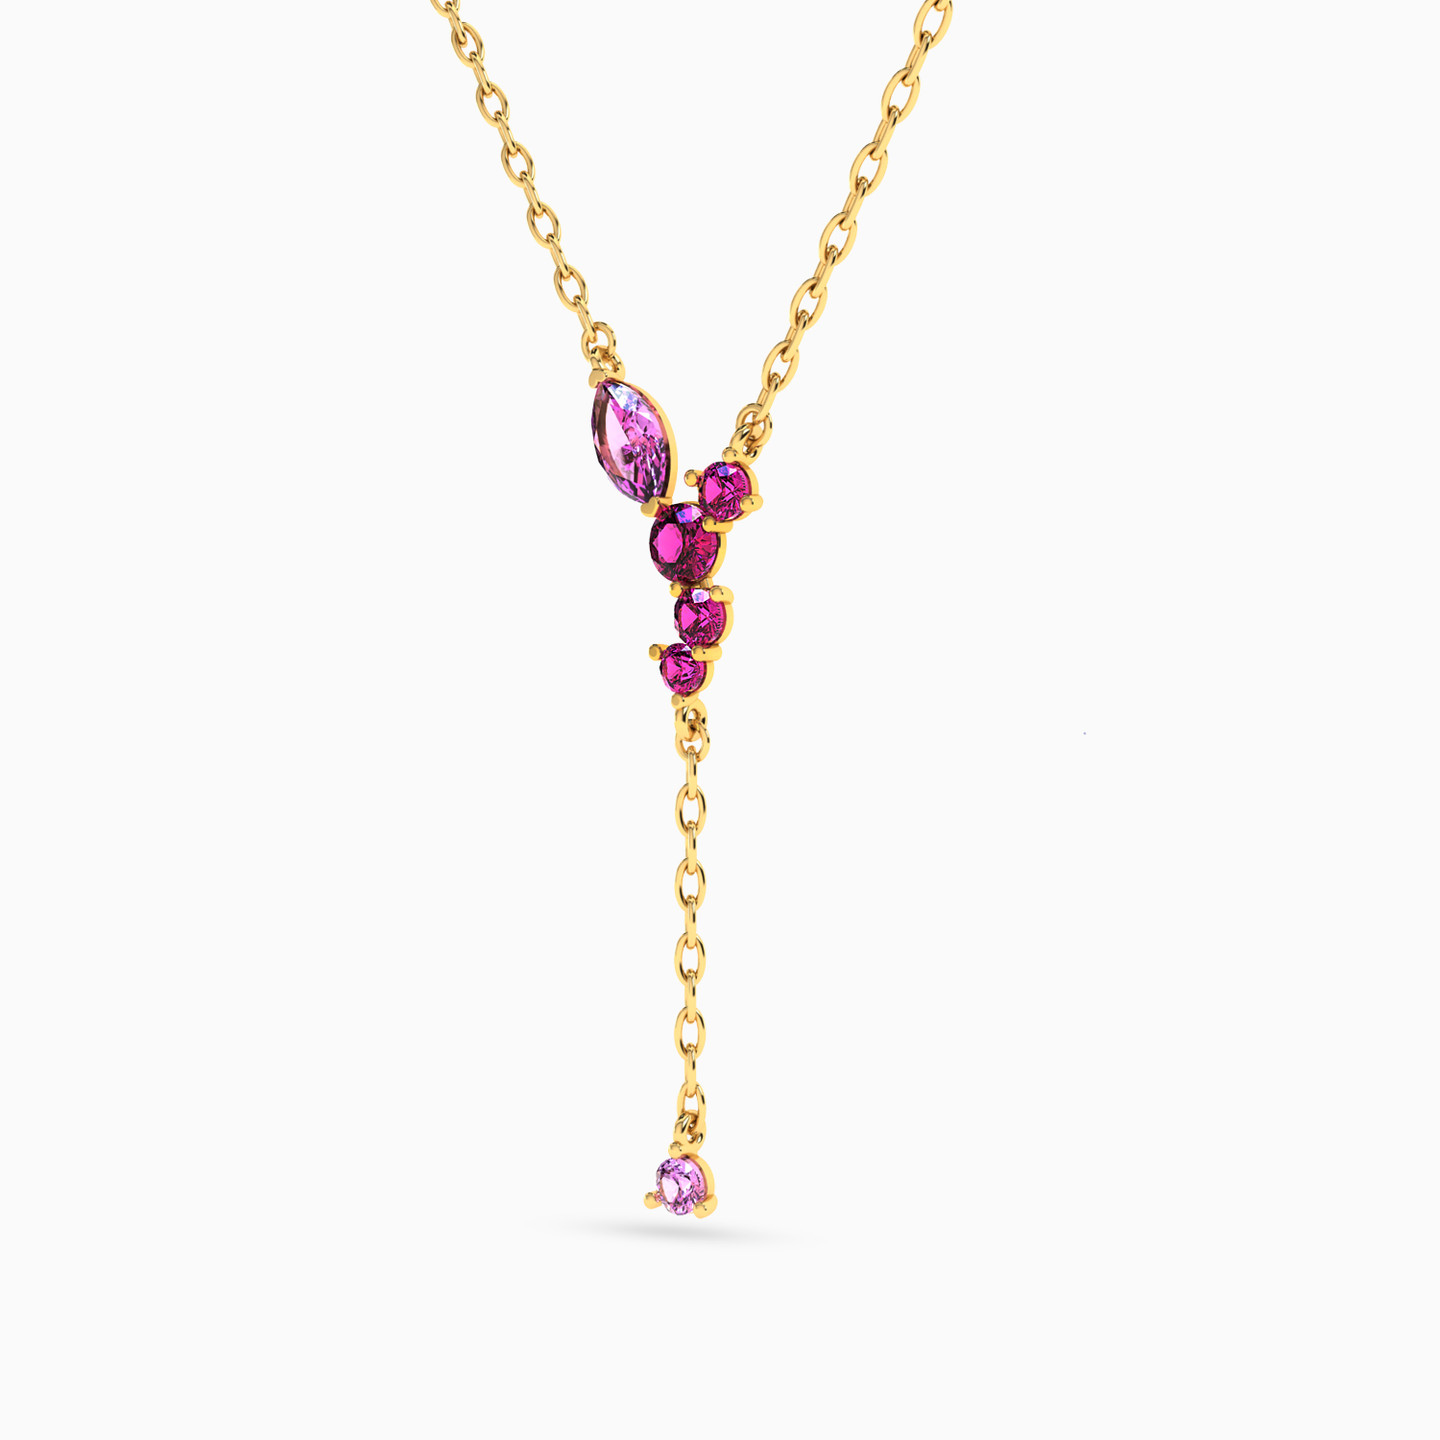 18K Gold Colored Stones Drop Pendant Necklace - 5